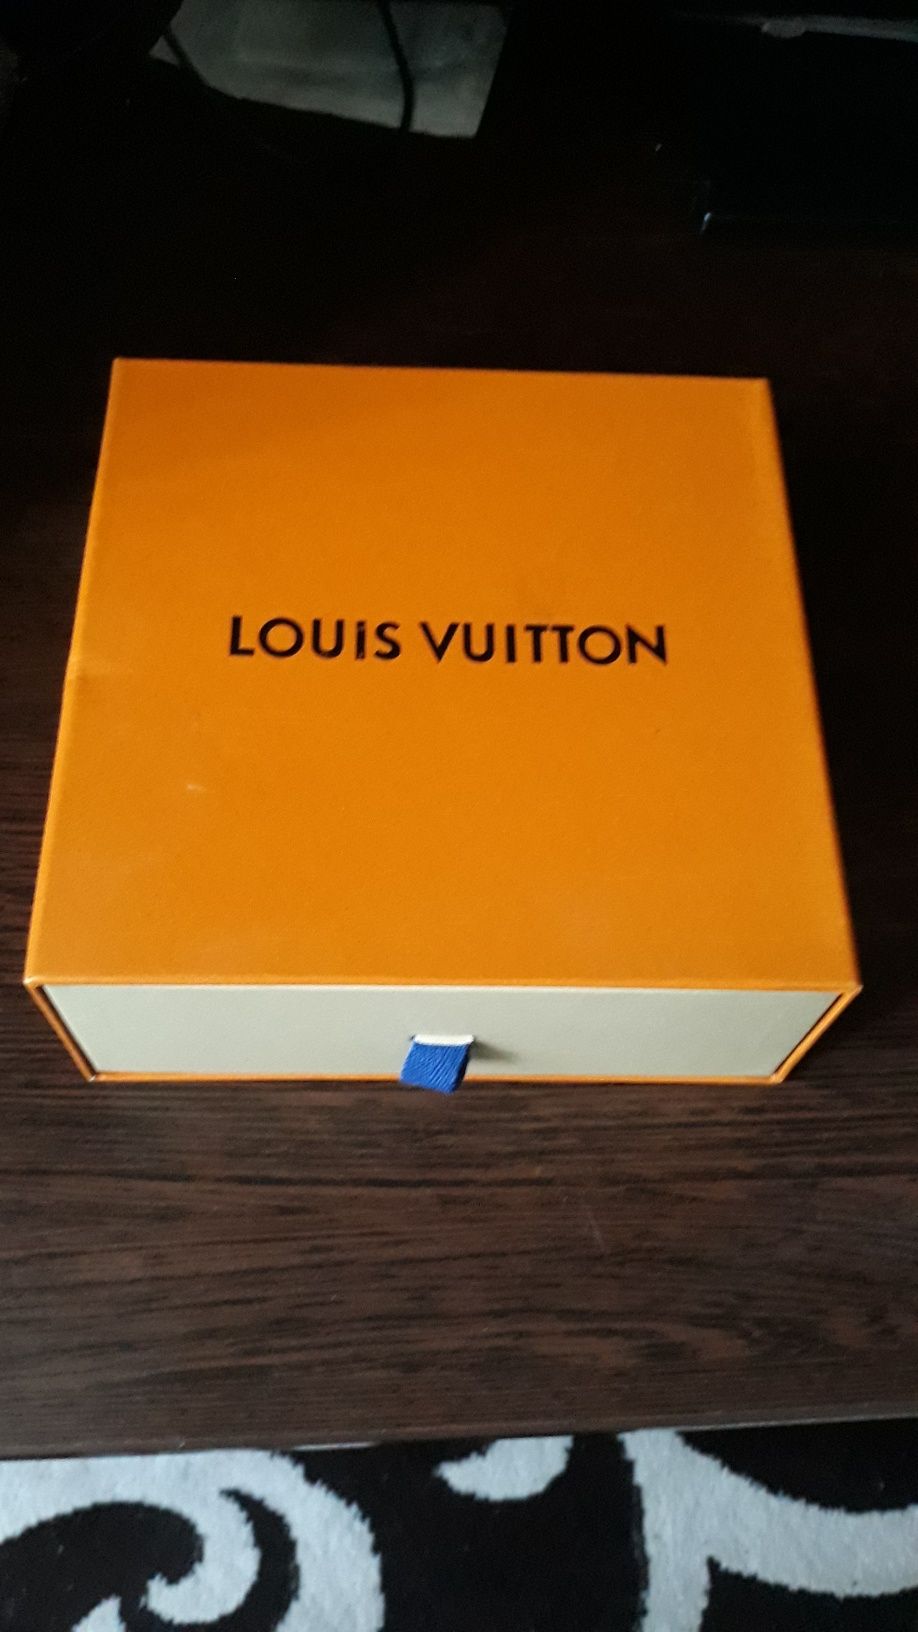 Bratara Louis Vuitton Bucuresti Sectorul 6 • OLX.ro